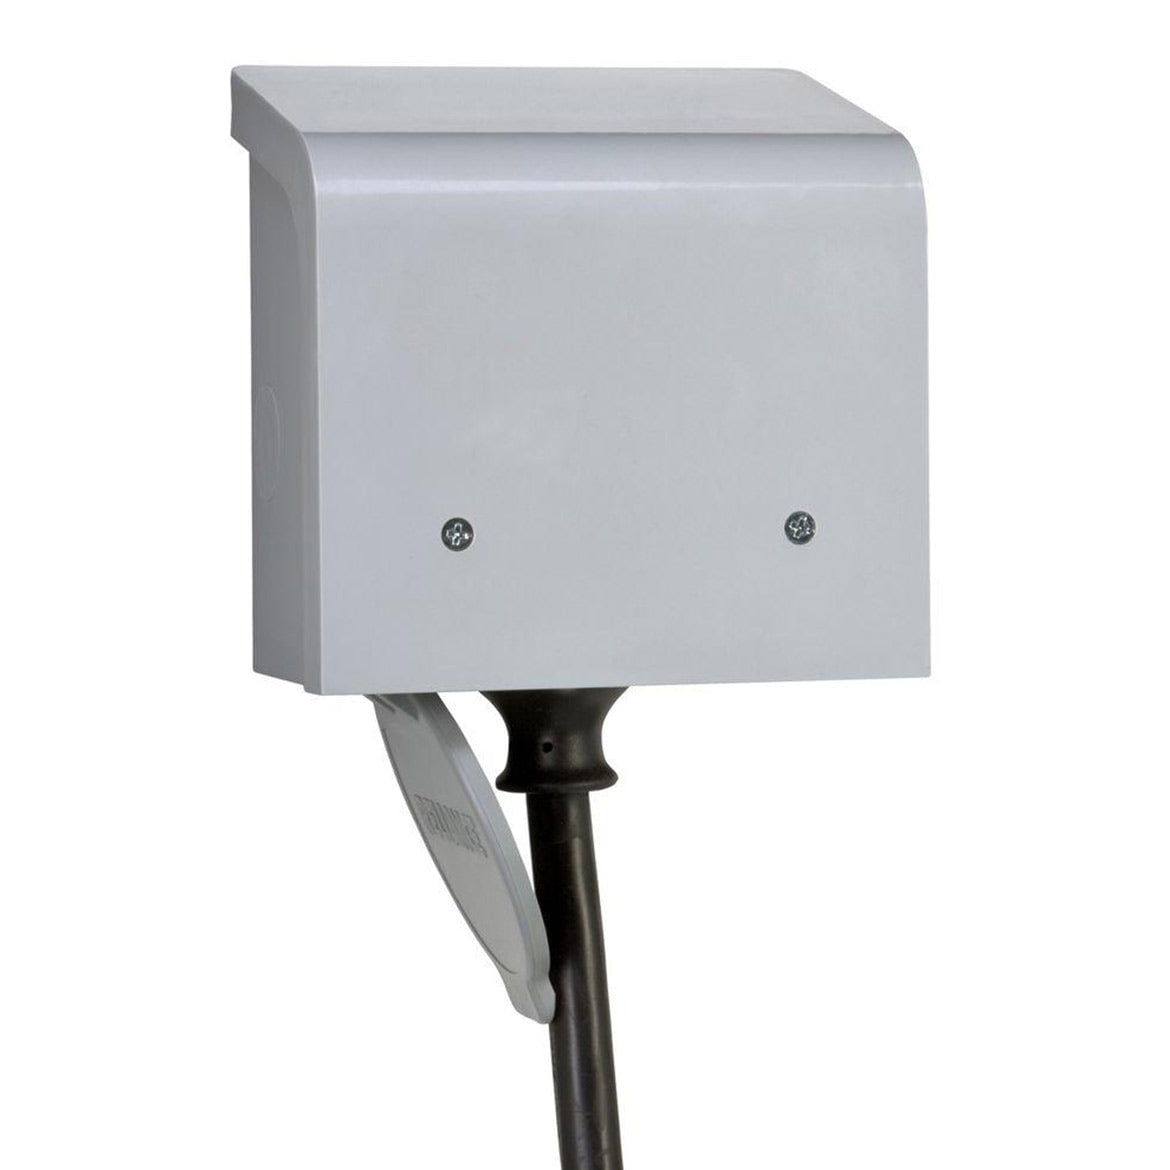 Halex 27693 Non-Metallic Strain Relief Connector, 1/2